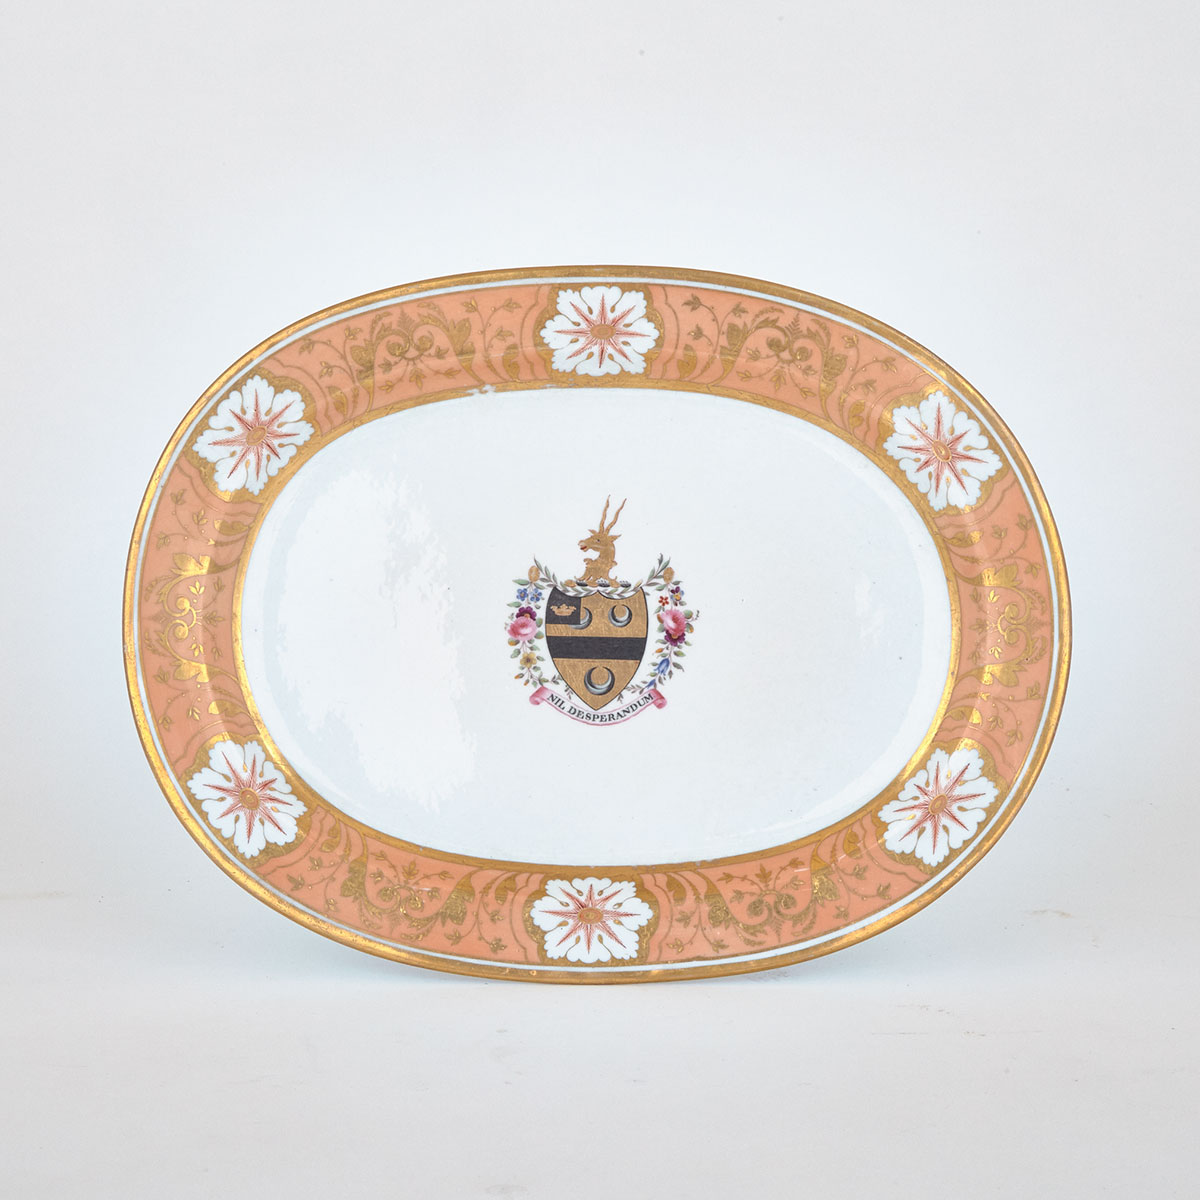 Chamberlains Worcester Armorial Oval Platter, c.1816-20